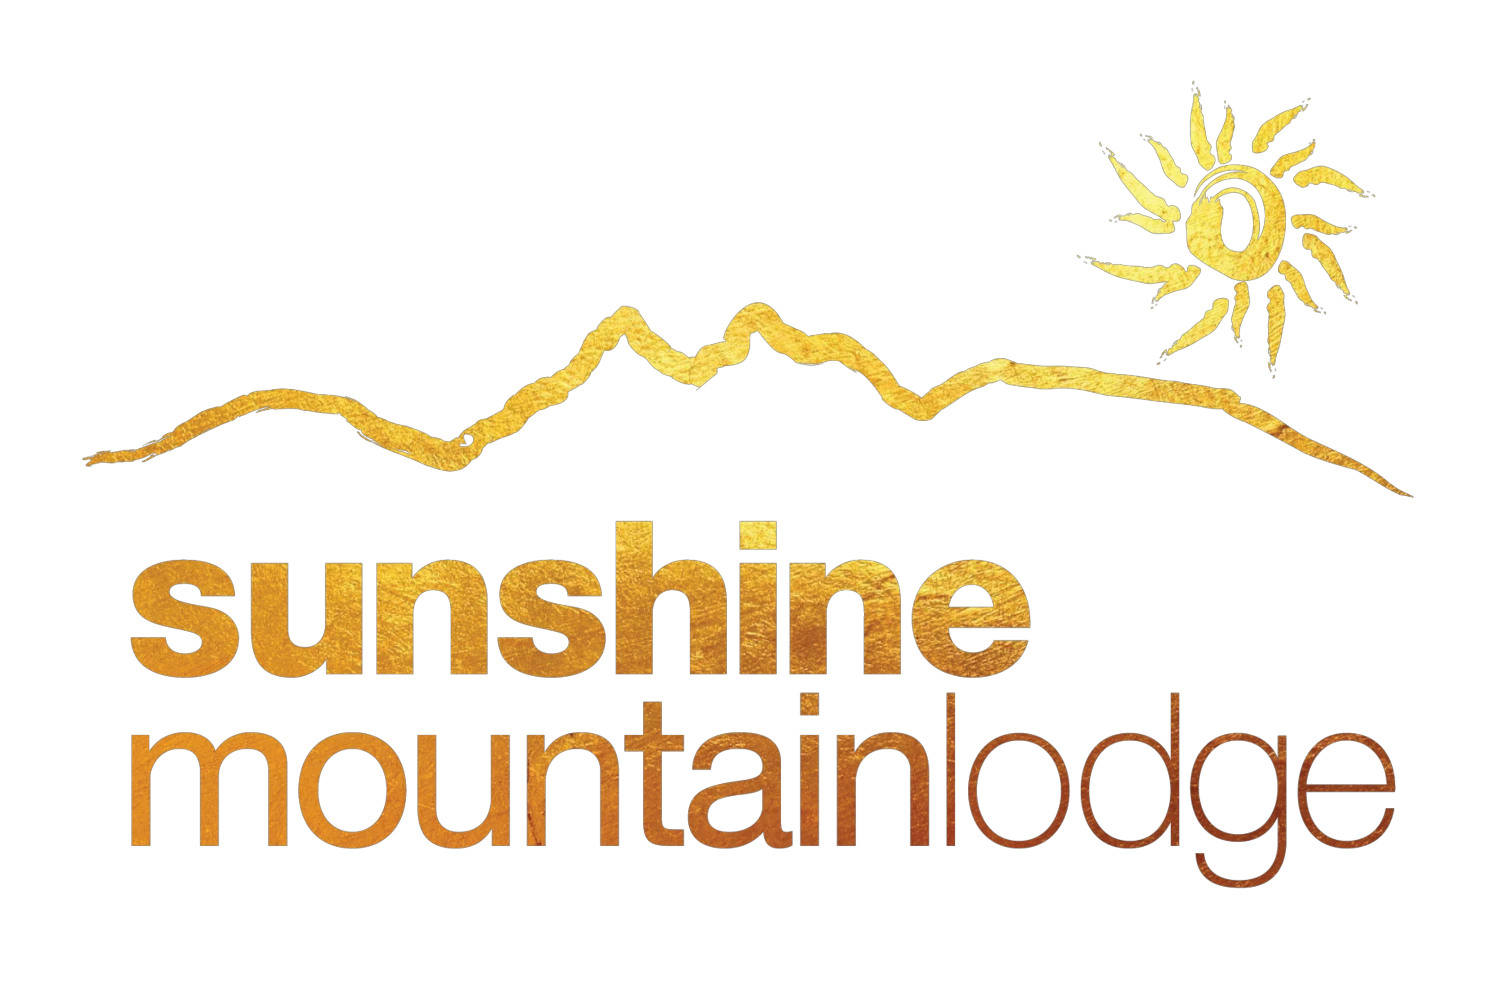 sunshinemountainlodge.com